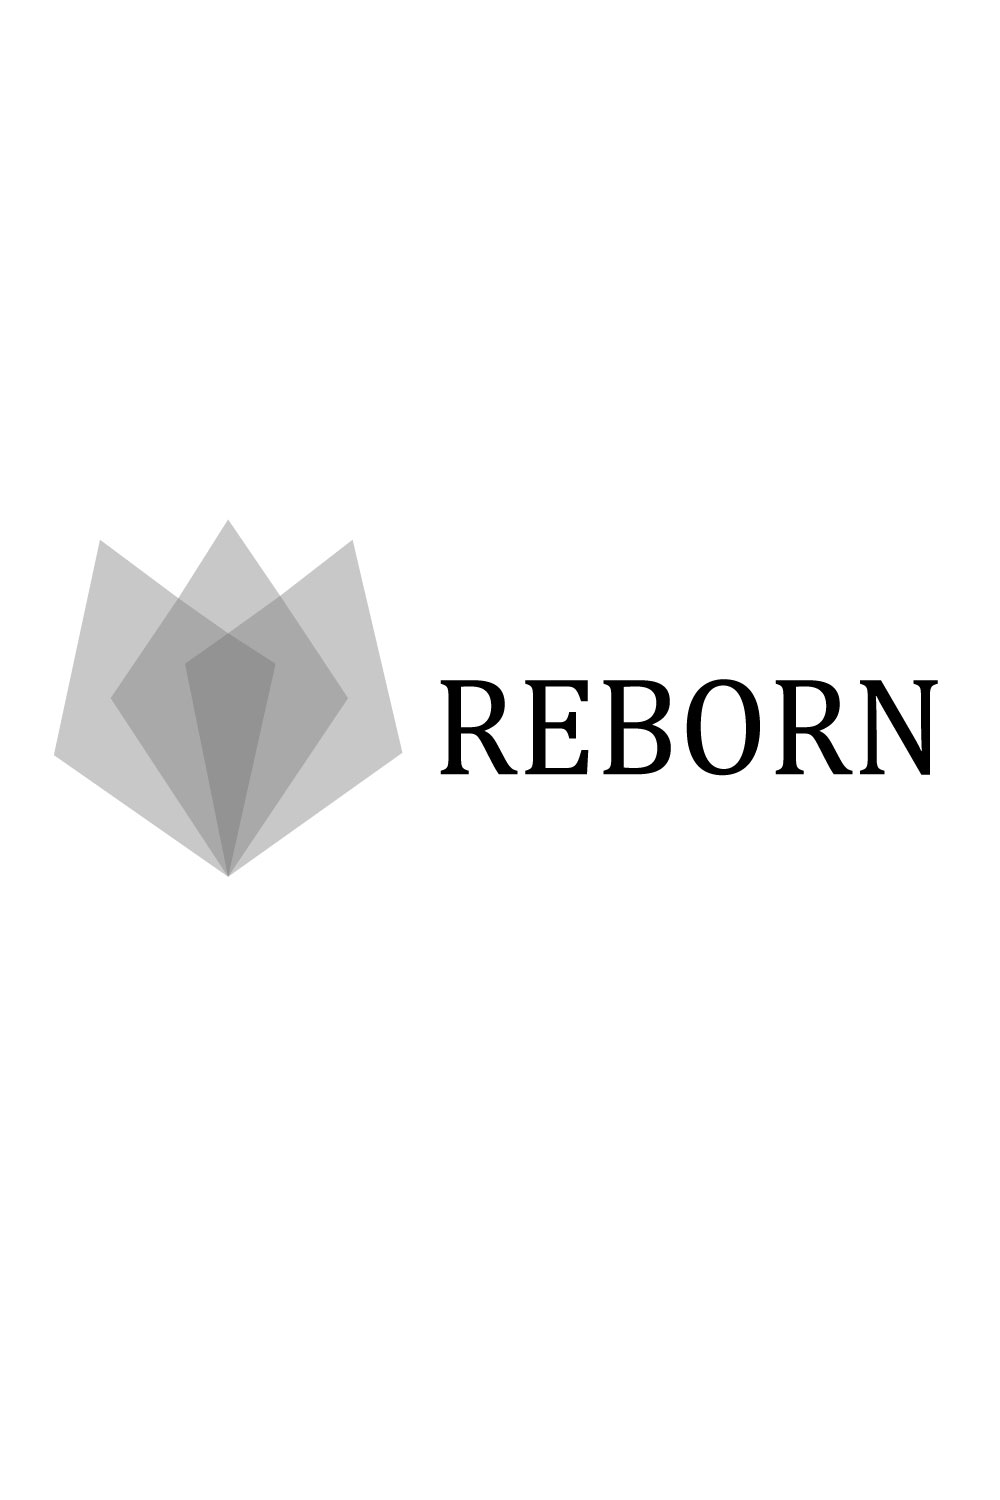 Reborn company logo pinterest preview image.